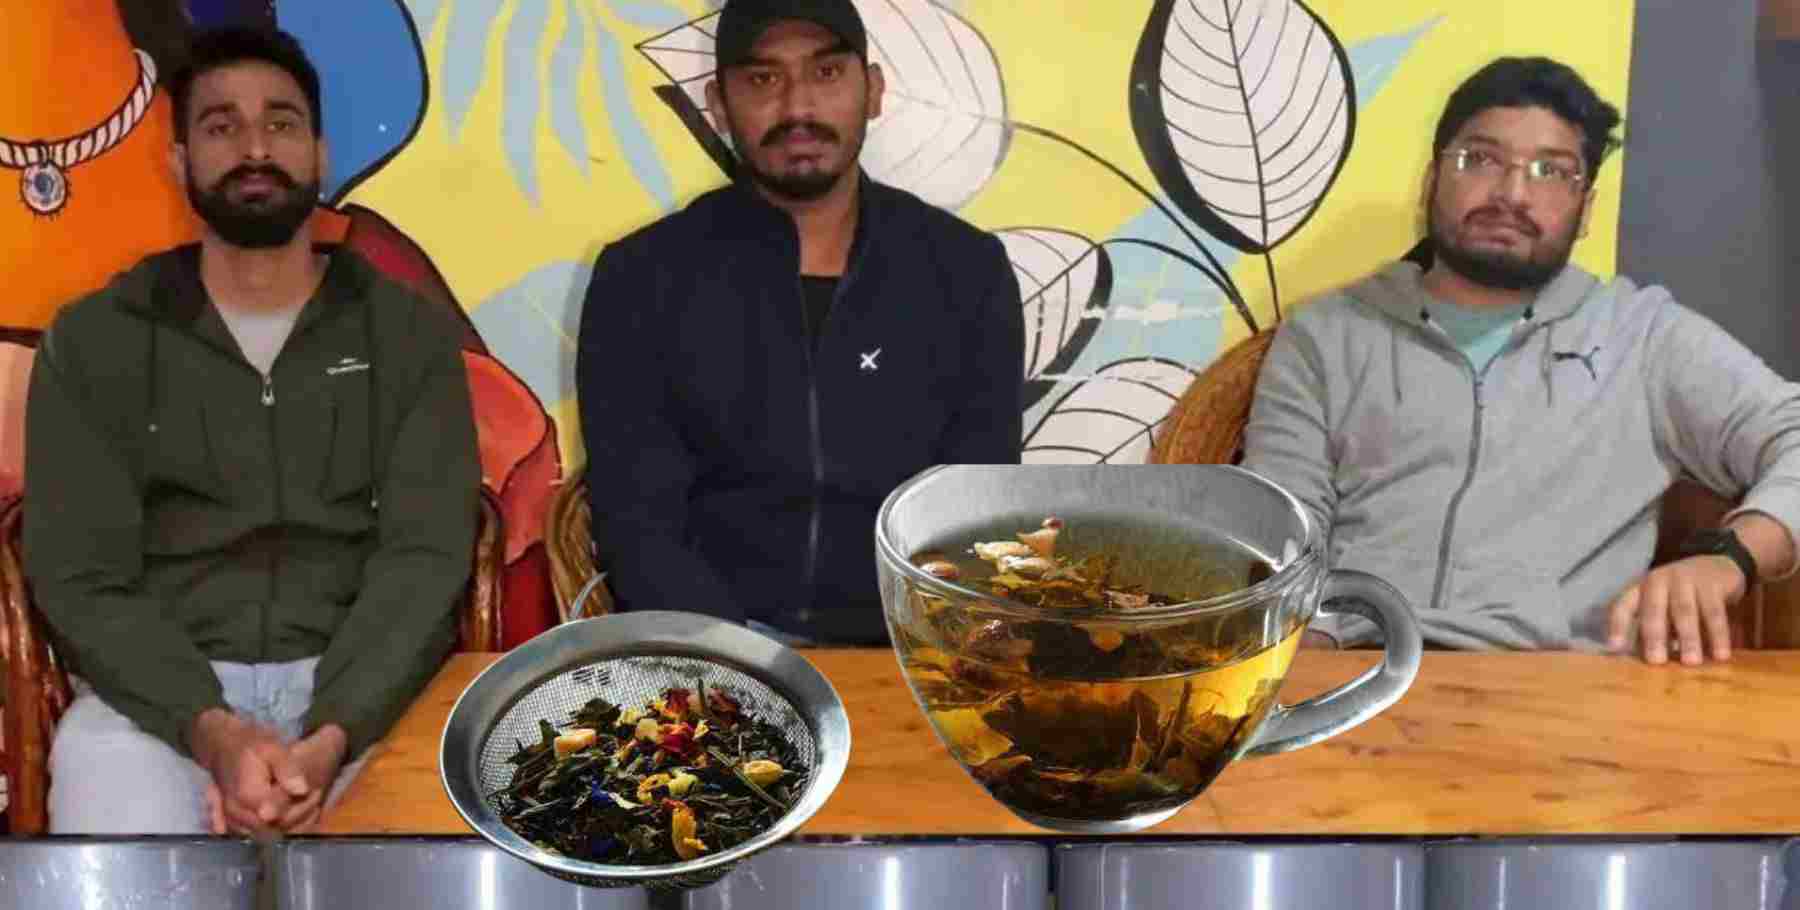 Uttarakhand news: Pithoragarh Tea self employment by three brothers